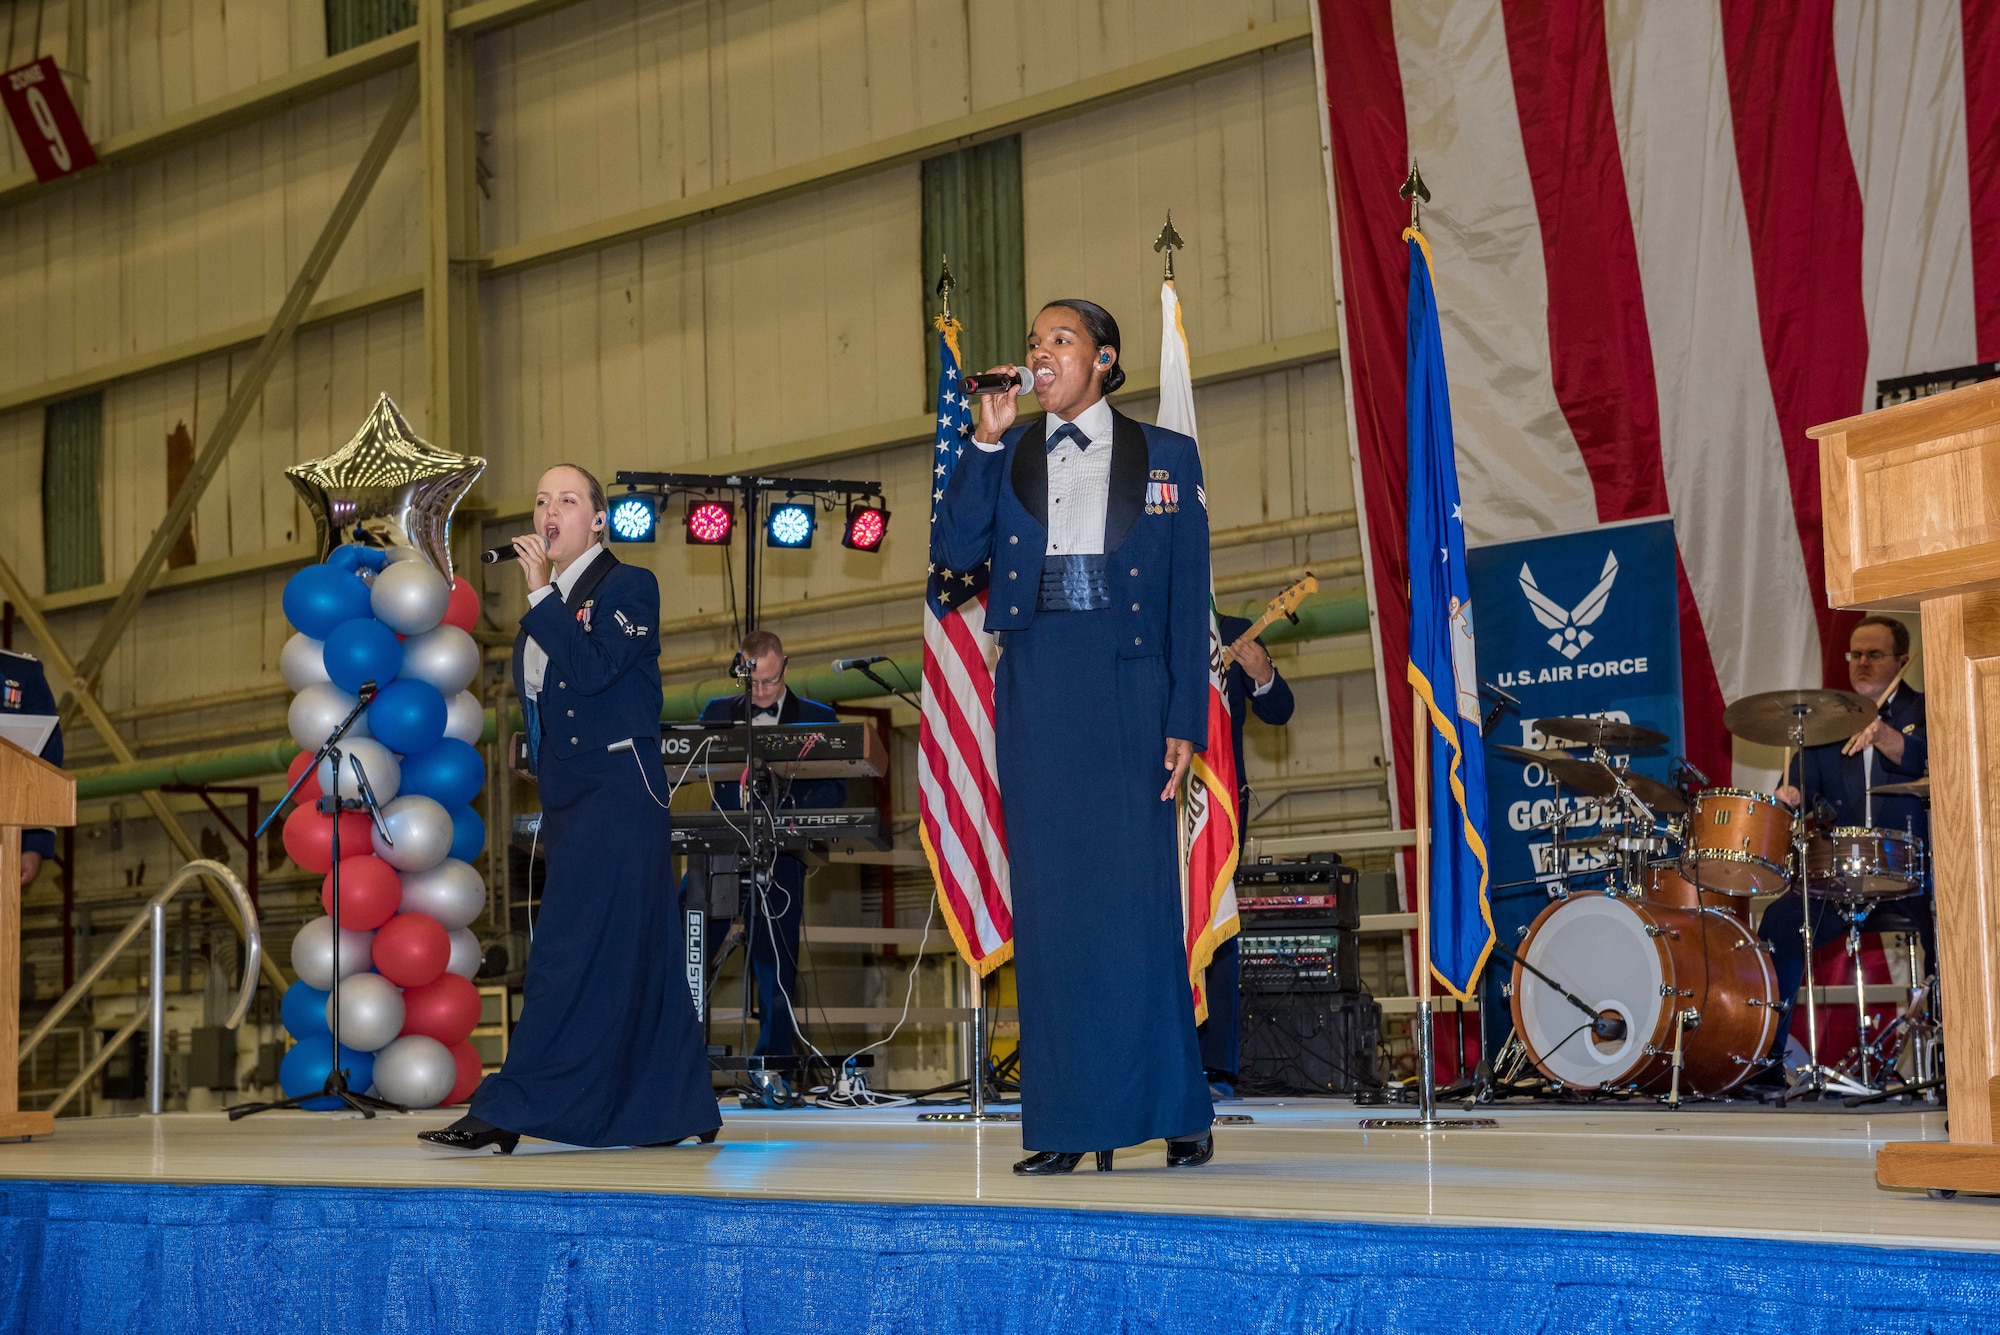 2019 Air Force Ball at Edwards Air Force Base, California, Sept. 14. (U.S. Air Force photo by Matt Williams)